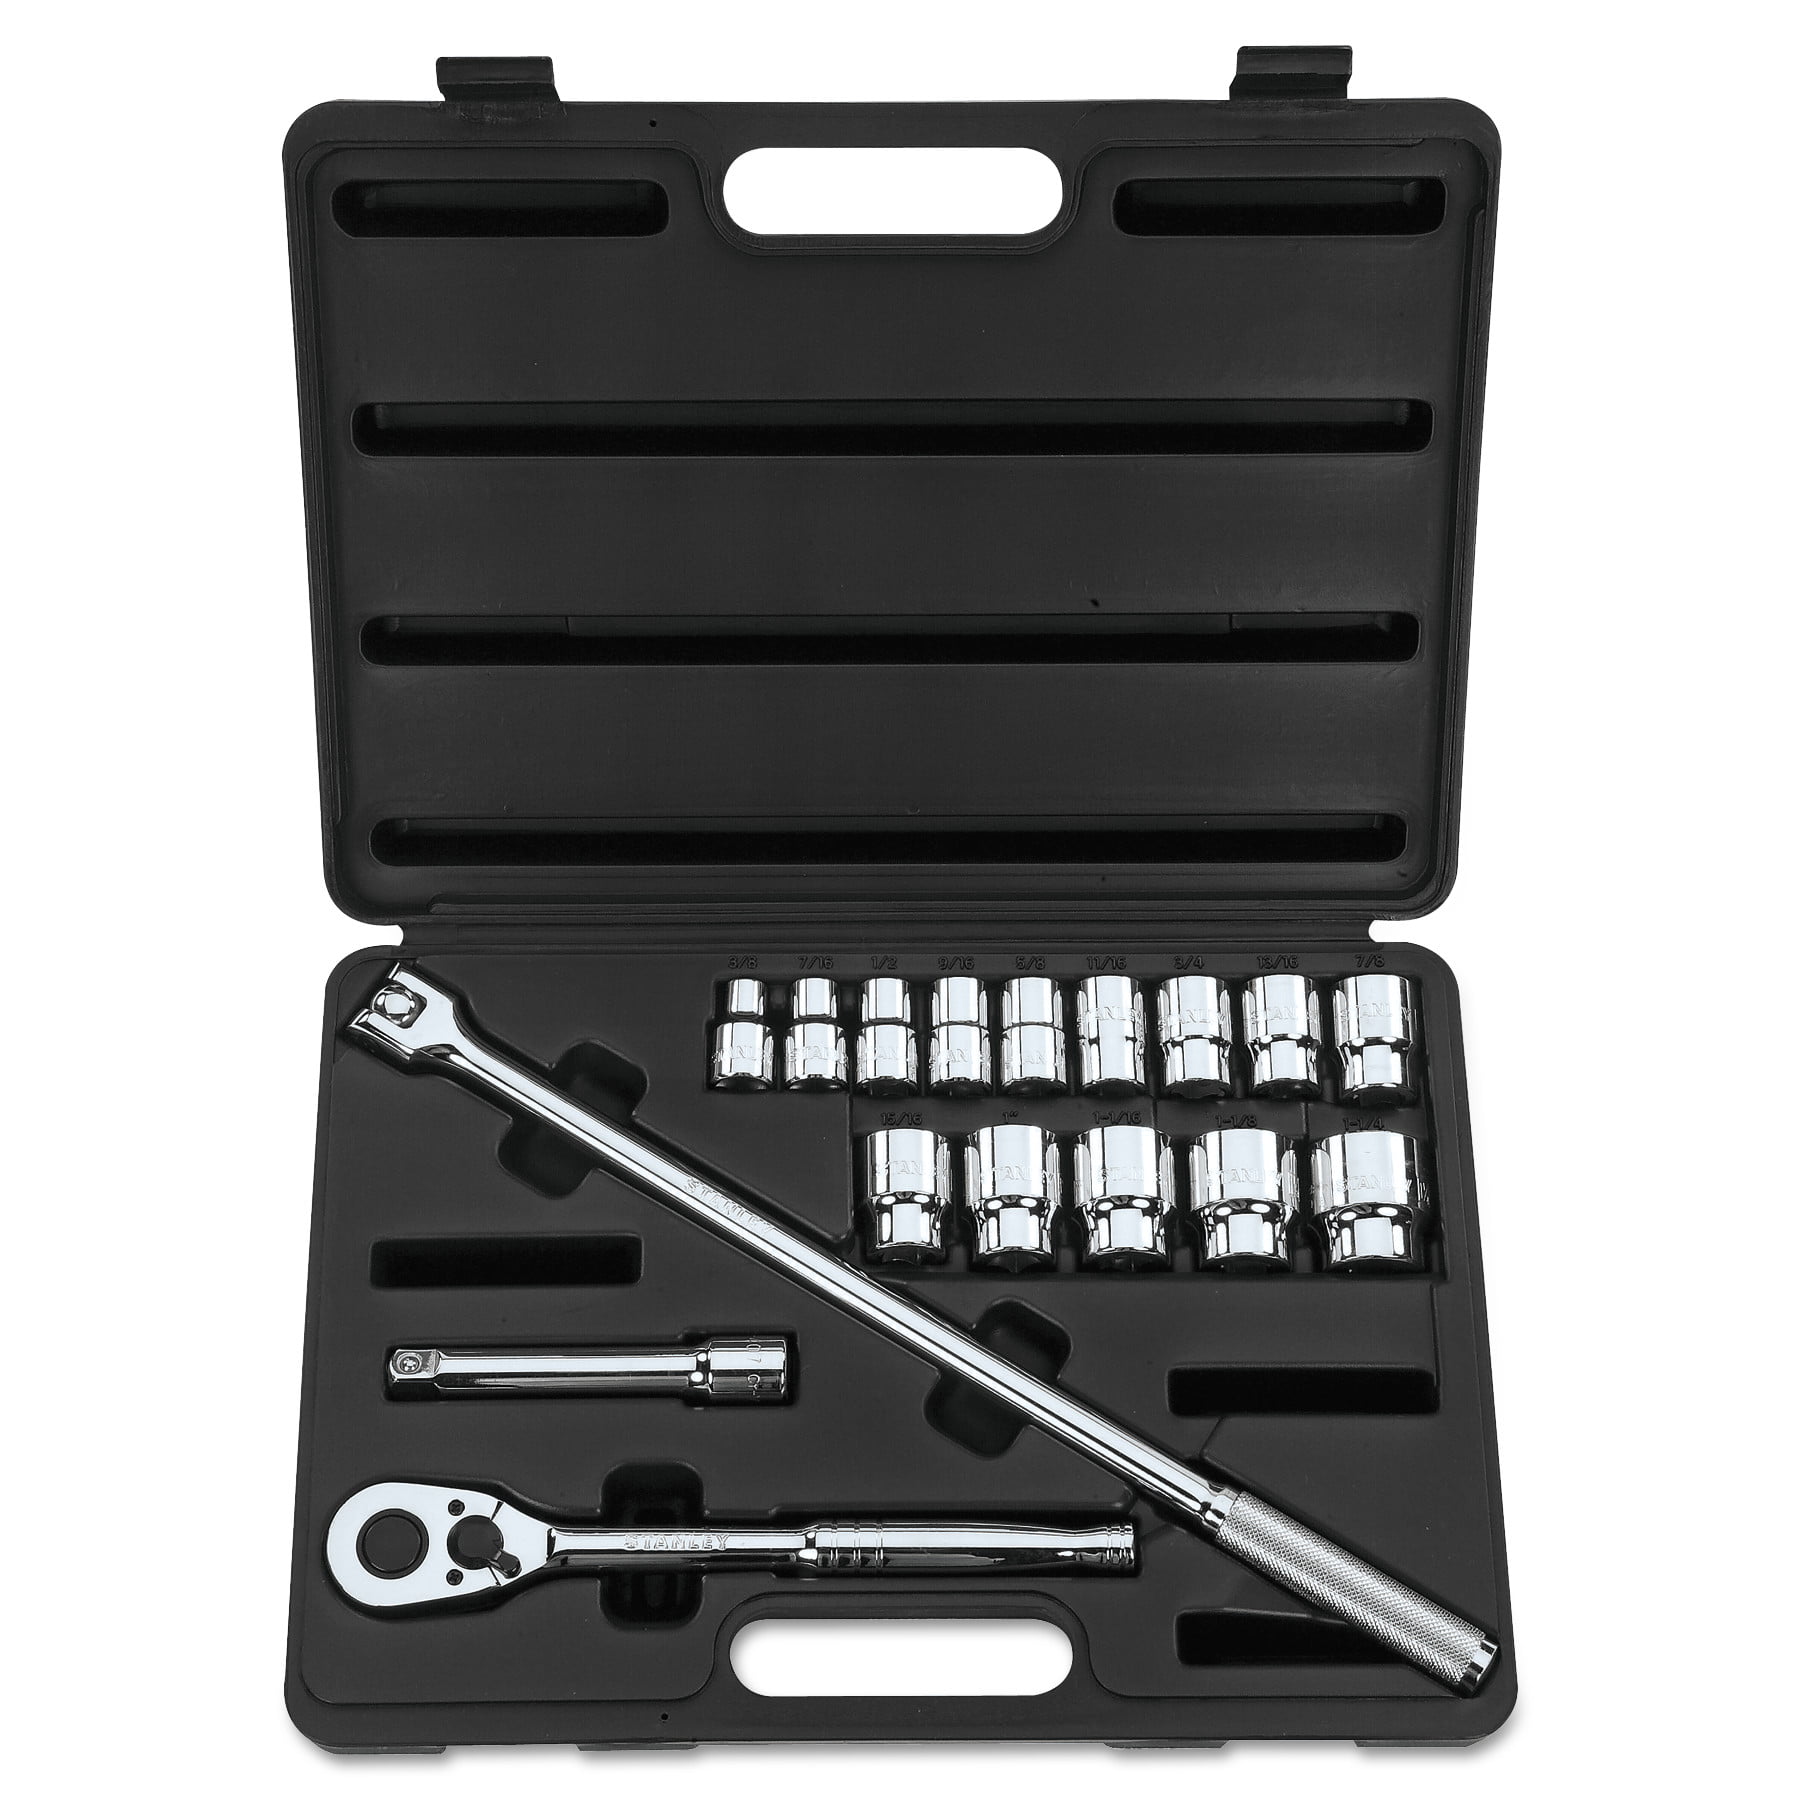 17 PC 1/2" Drive Metric Socket Wrench Tool Kit Set